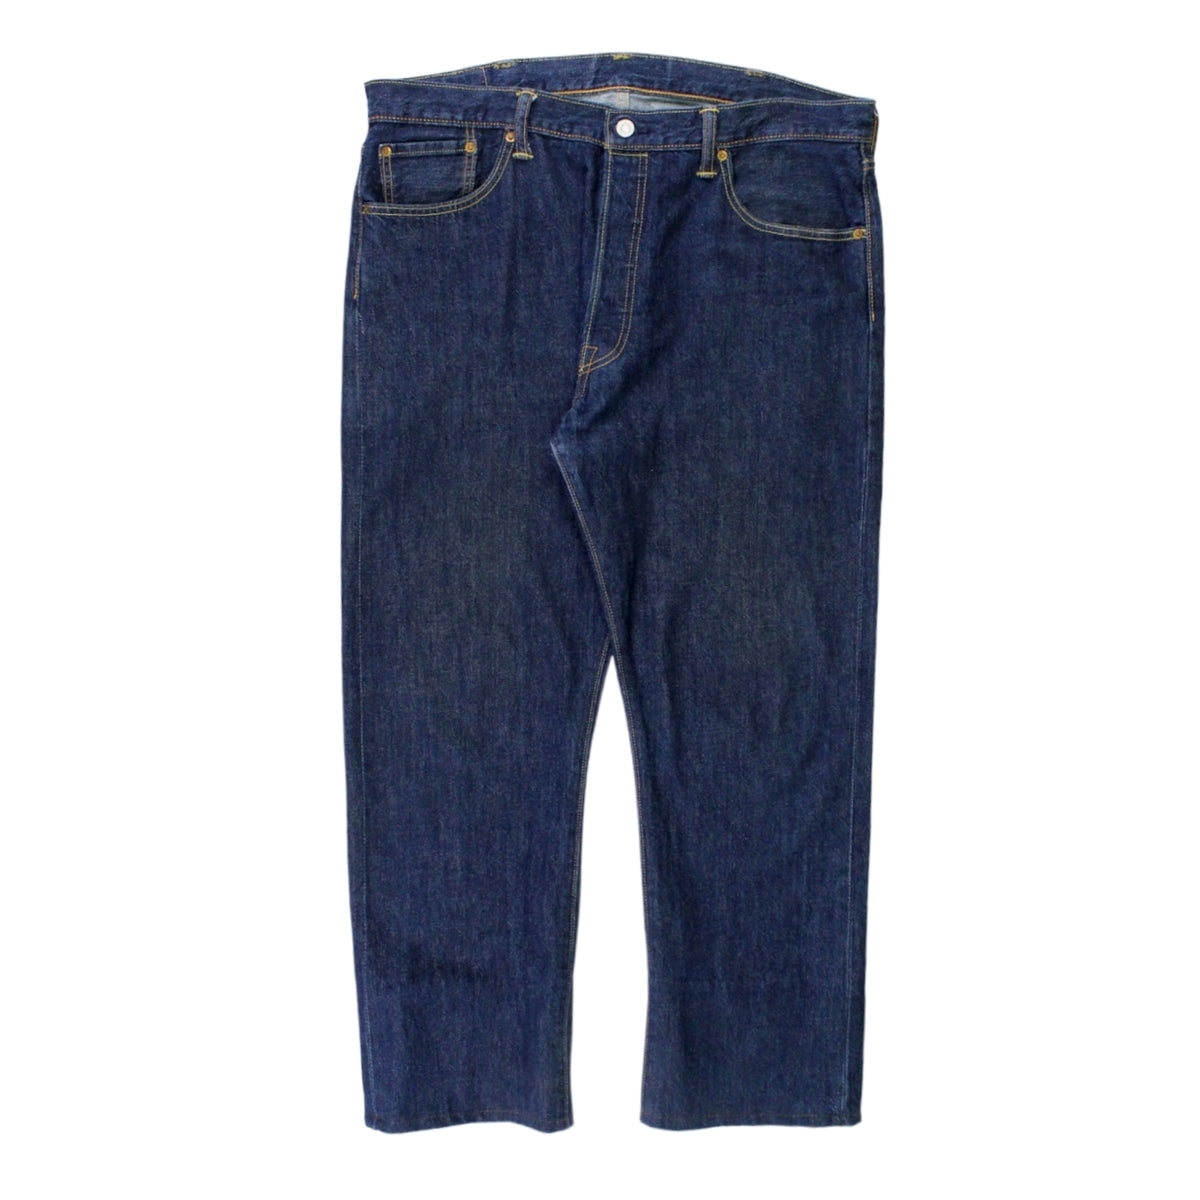 Levi's 501 Dark Indigo Jeans